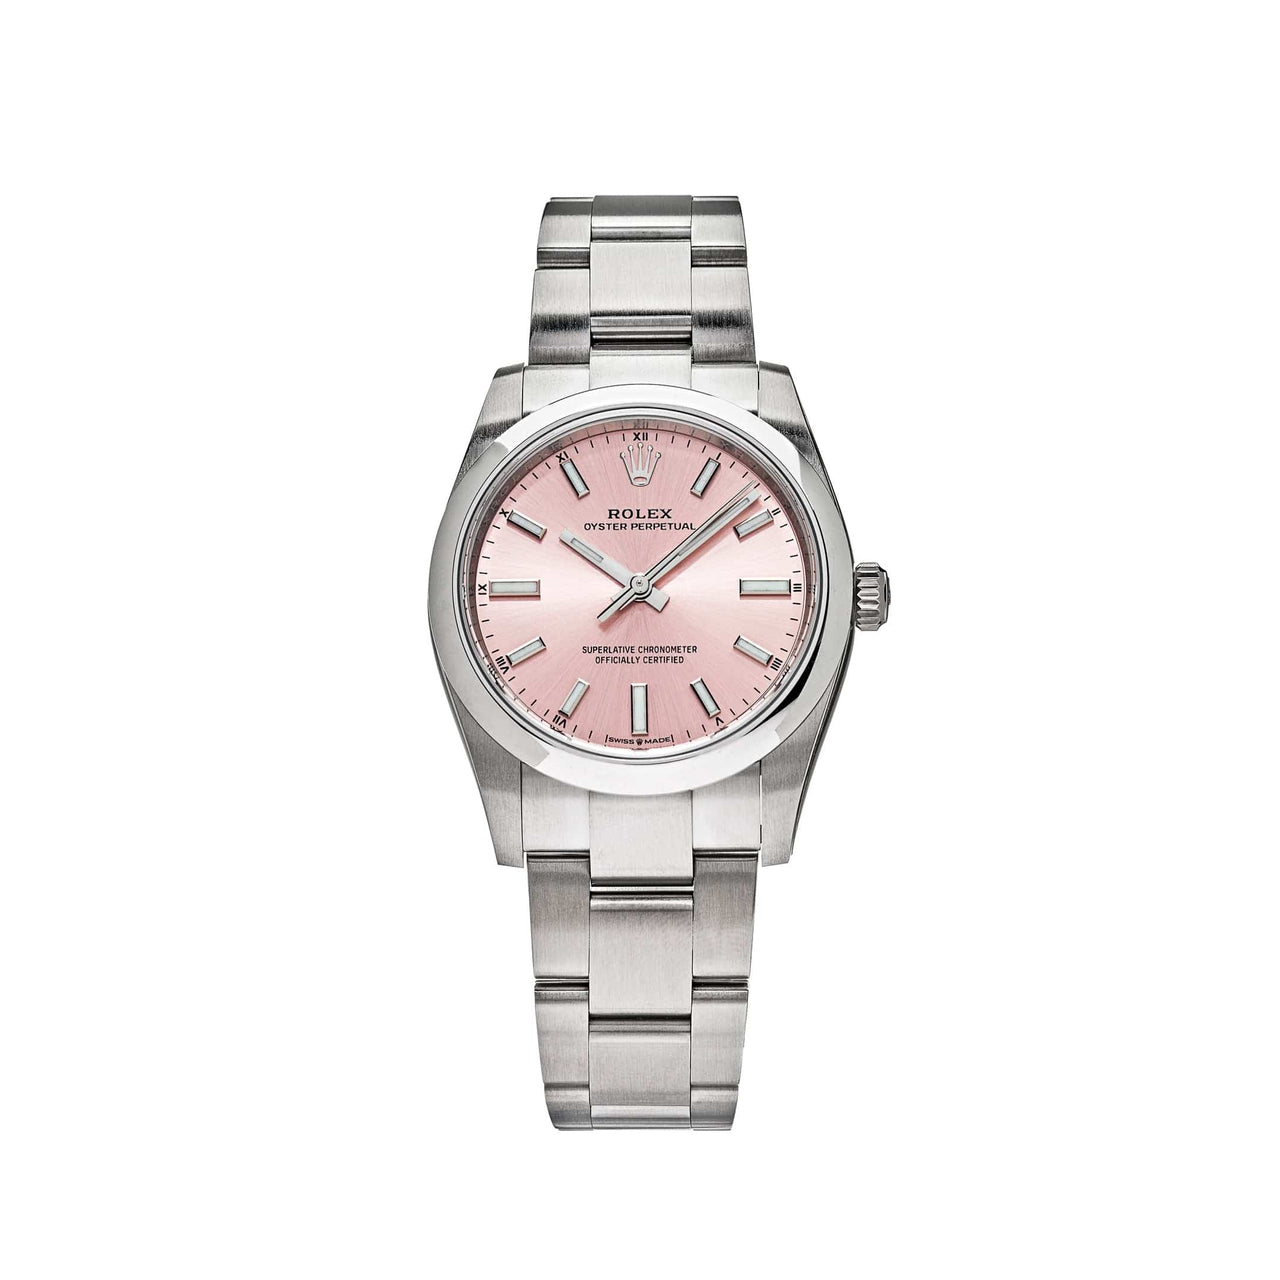 Luxury Watch Rolex Oyster Perpetual Ladies' Pink Dial 34mm 124200 Wrist Aficionado